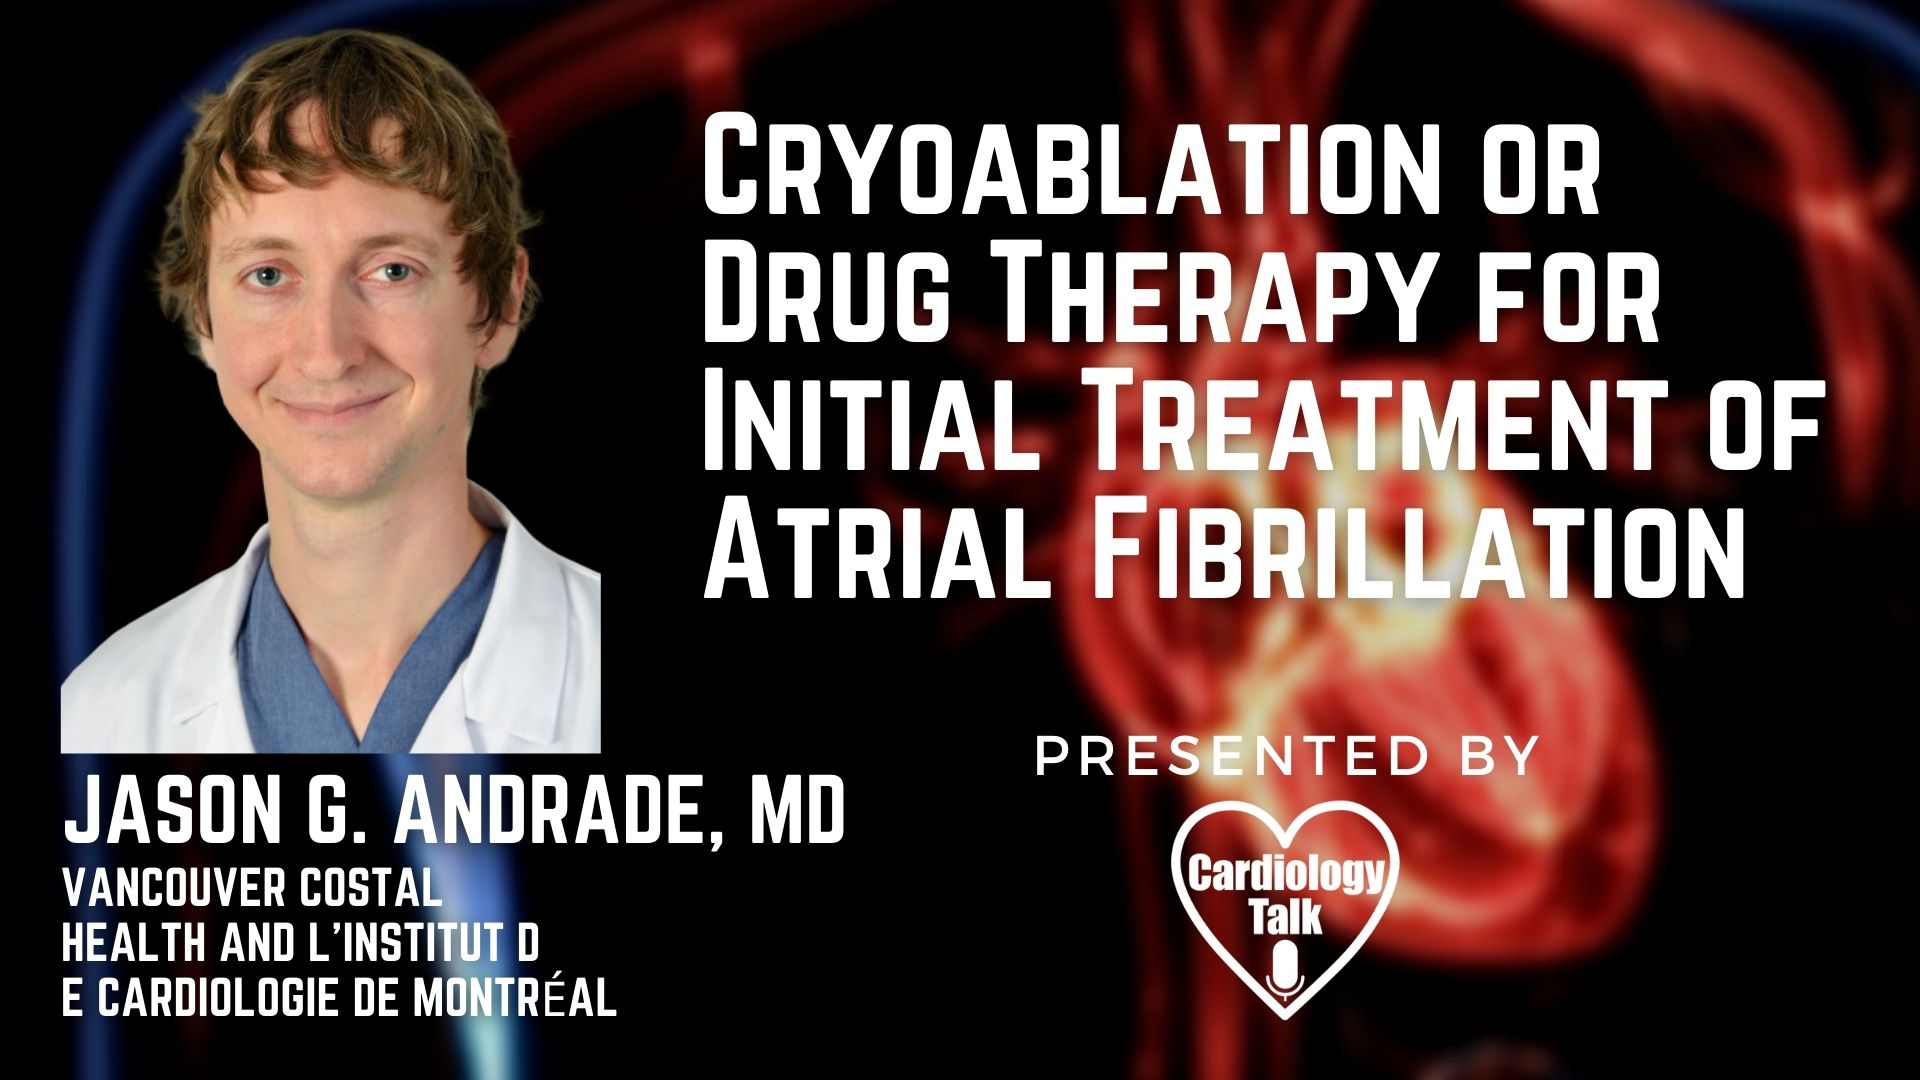 Jason G. Andrade, MD @DrJasonAndrade @VCHhealthcare @ICMtl #AtrialFibrillation #Cardioloy #Research